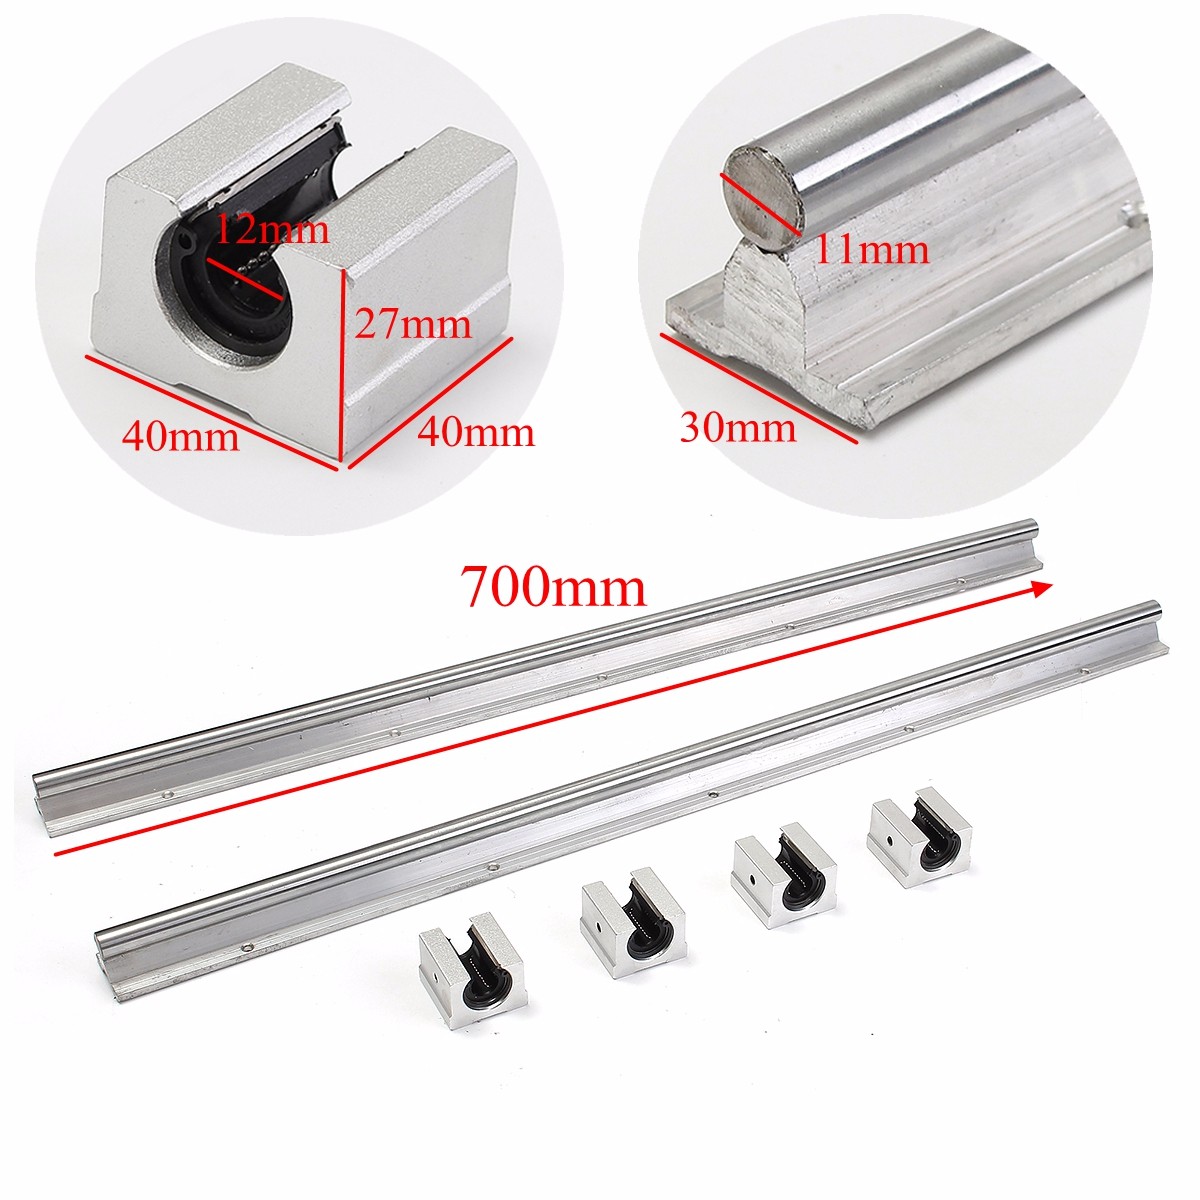 2Pcs SBR12-700mm Linear Bearing Slide Rails Linear Guide + 4Pcs SBR12UU Blocks For 3D Printer CNC 73